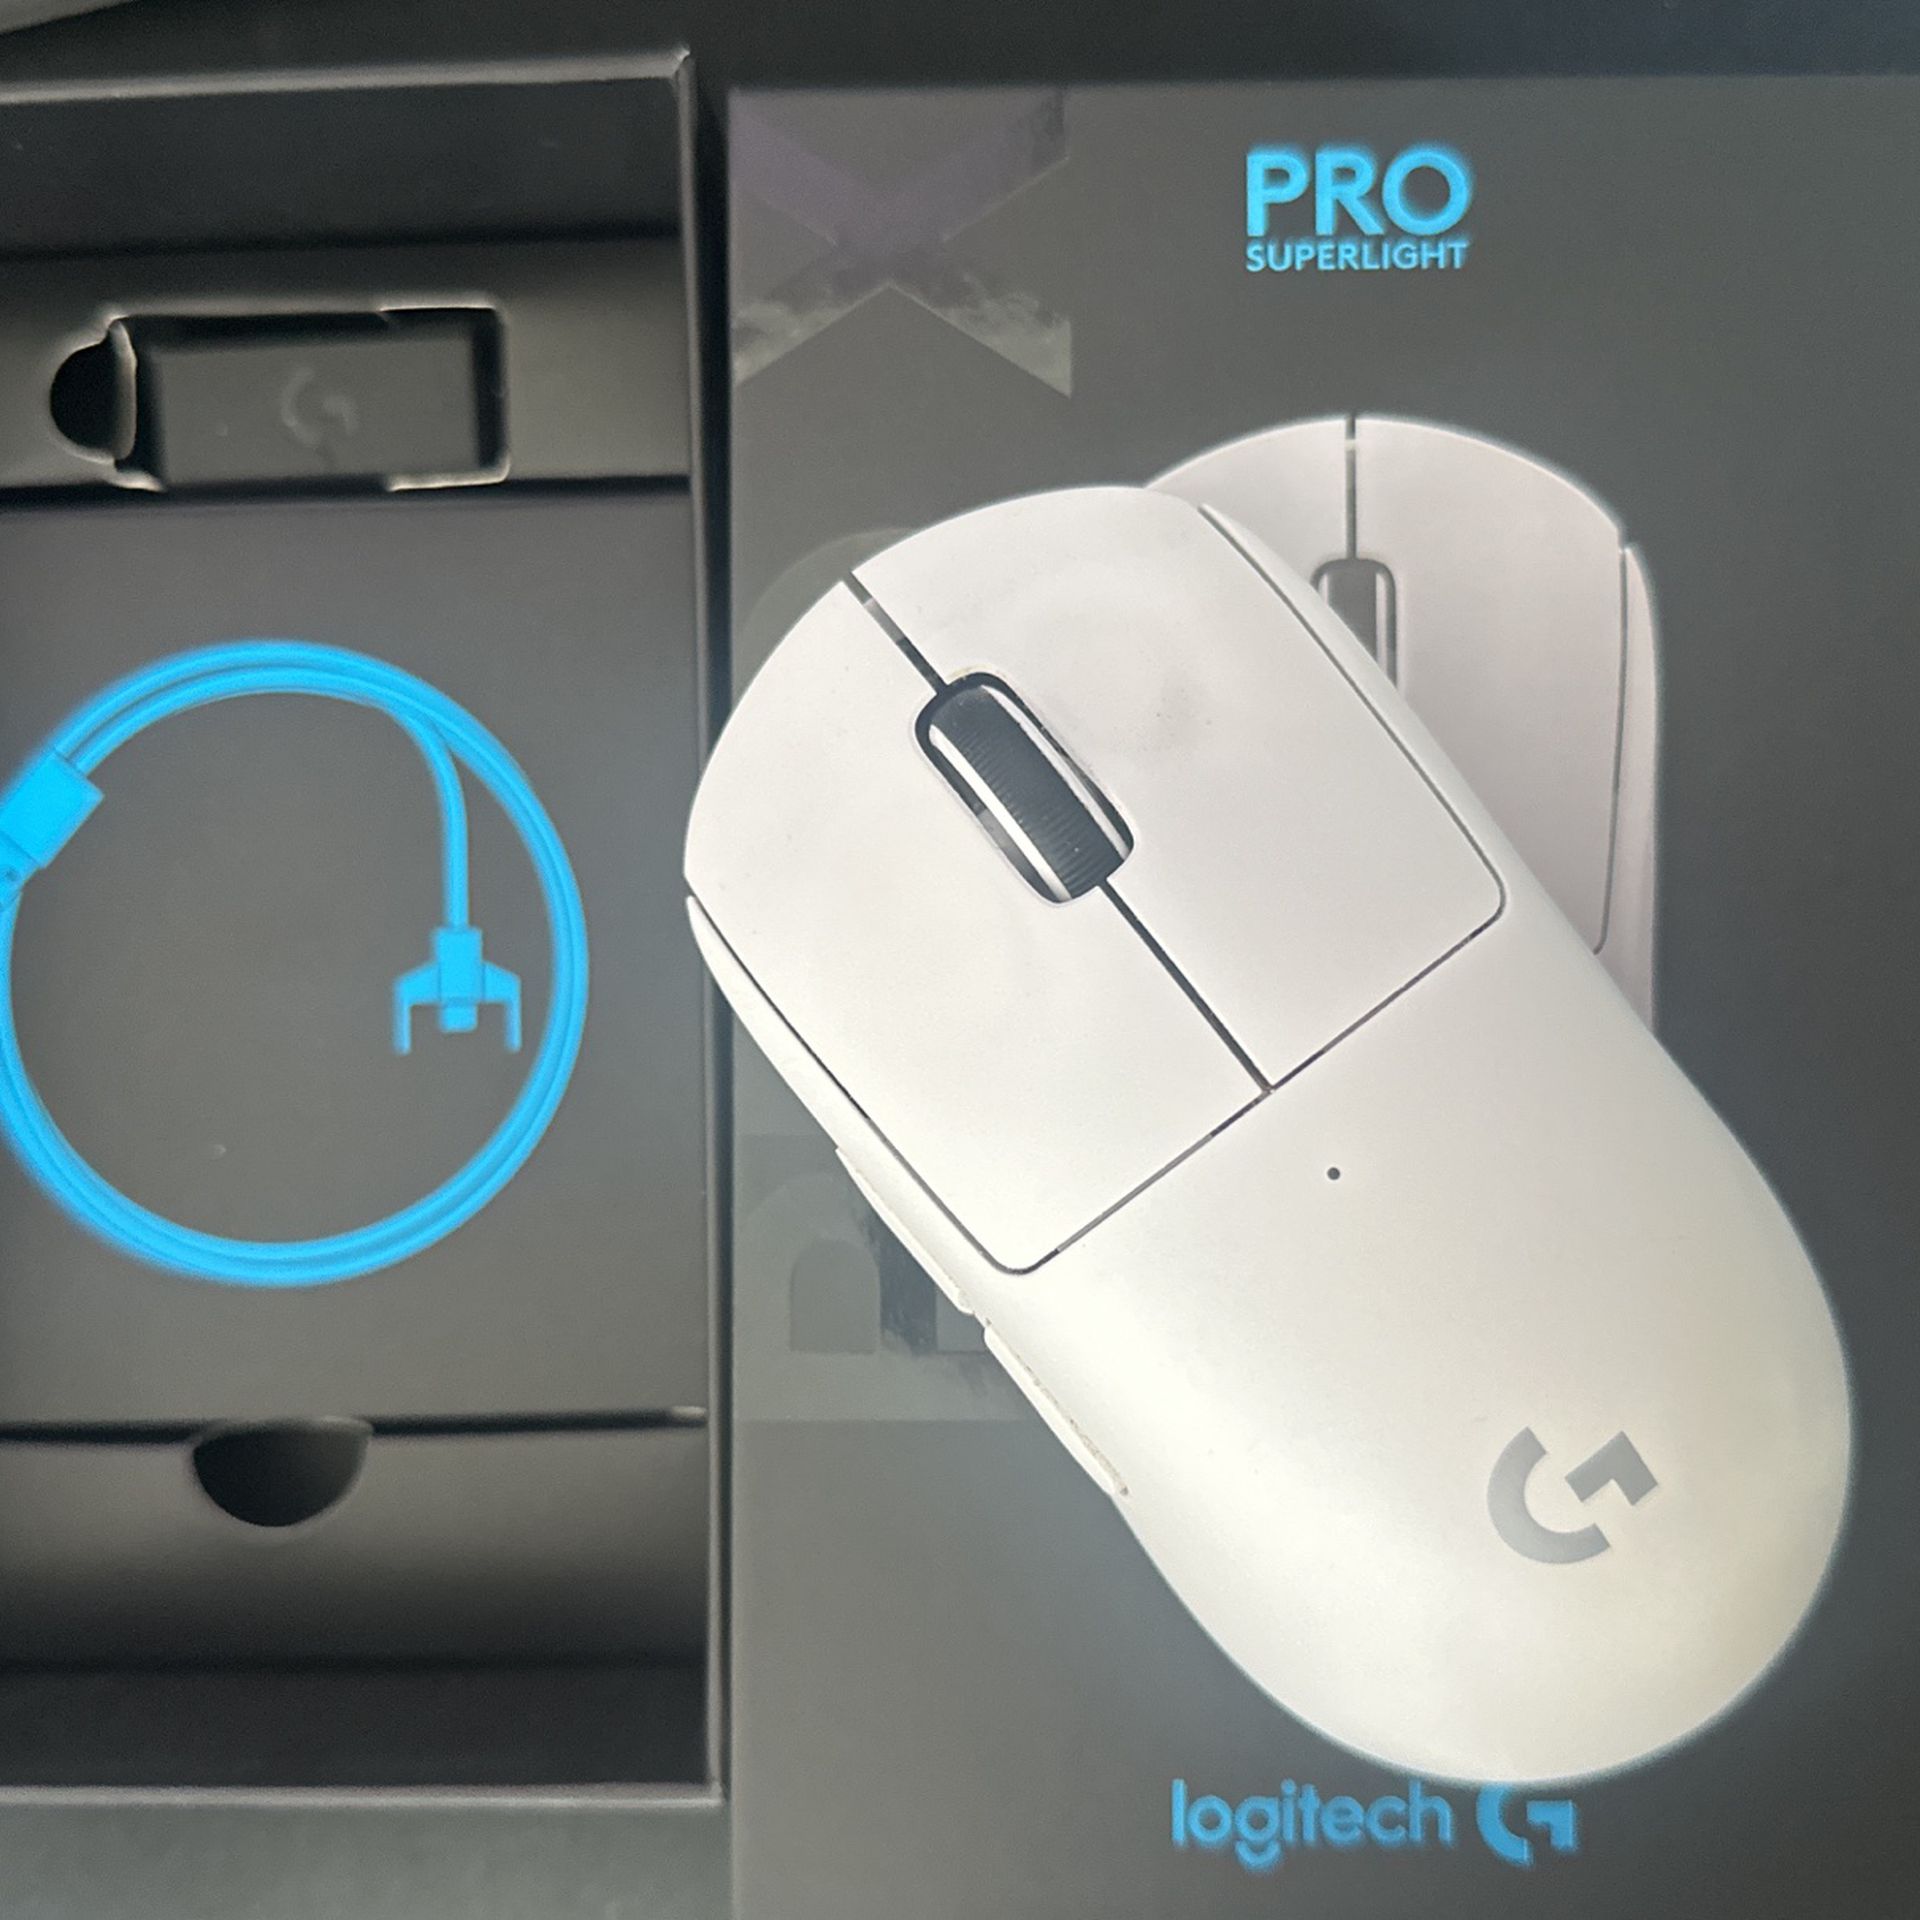 Logitech G Pro Superlight WHITE Gaming Mouse